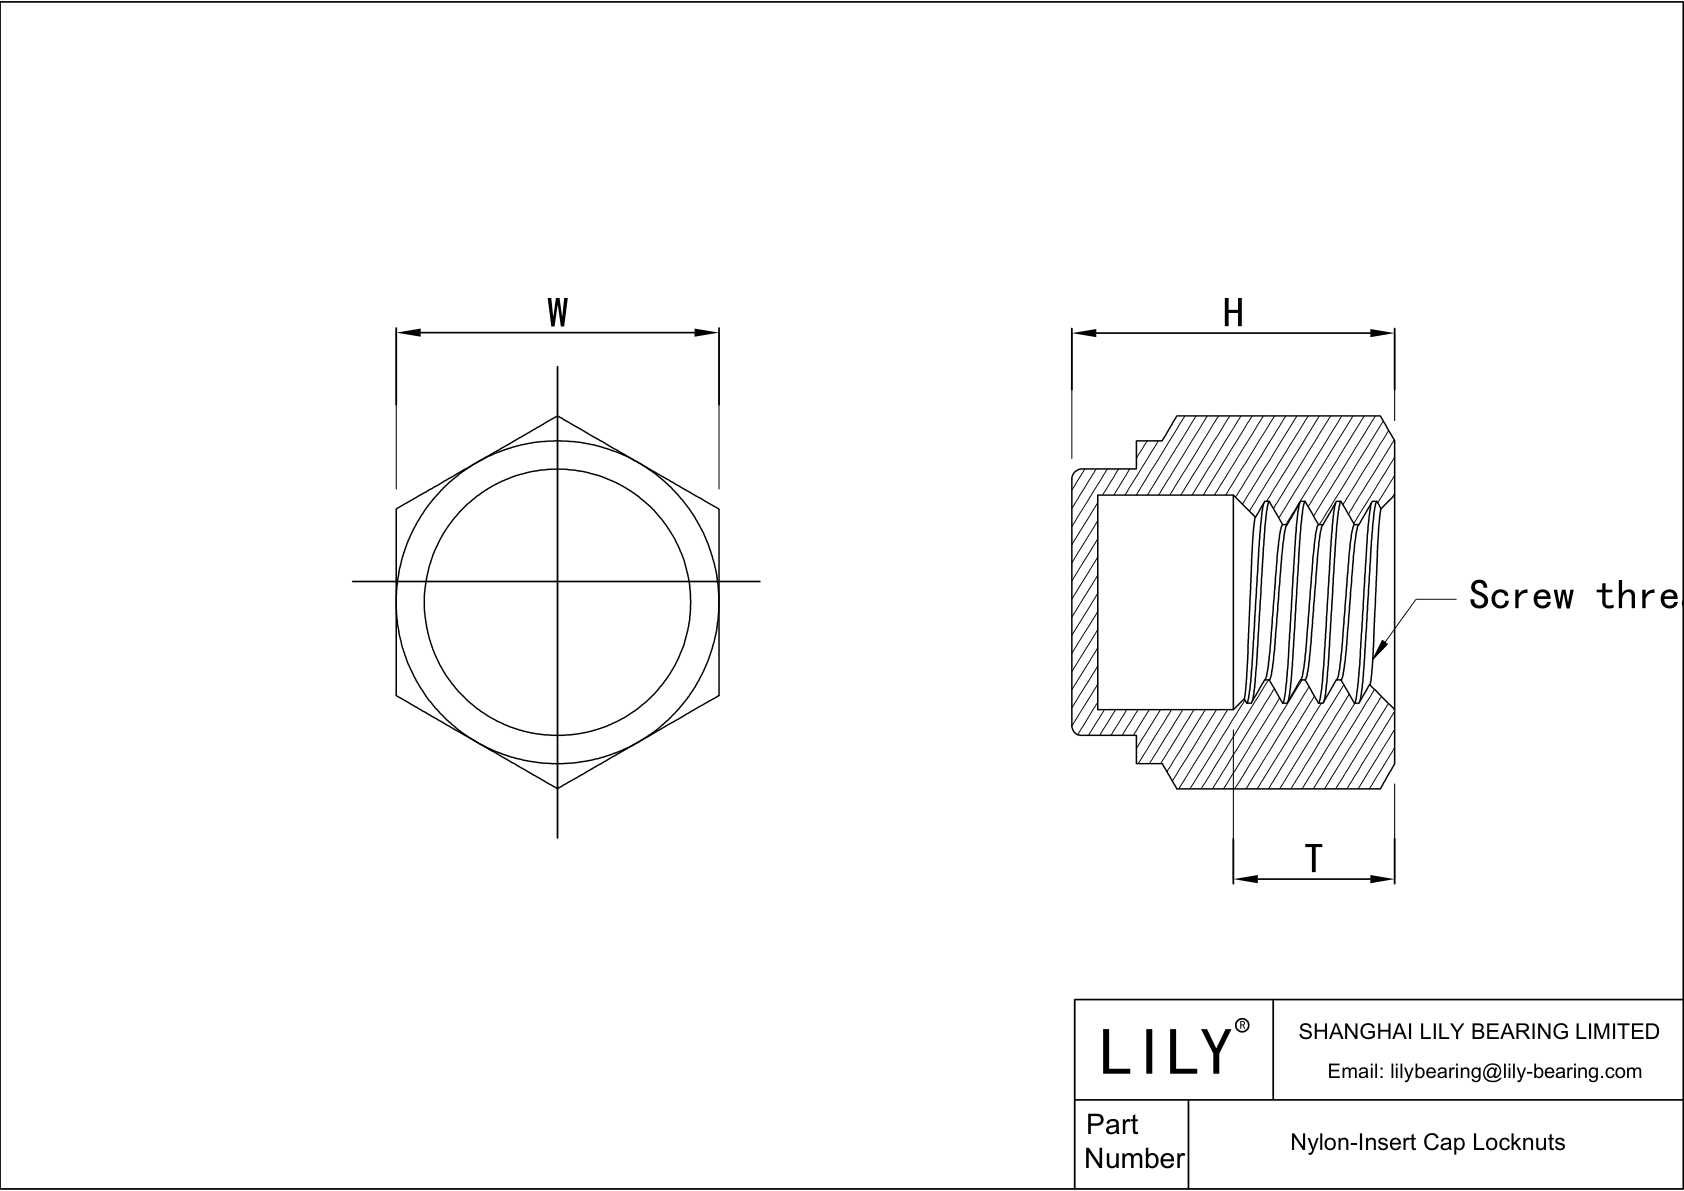 98190A111 | Nylon-Insert Cap Locknuts | Lily Bearing